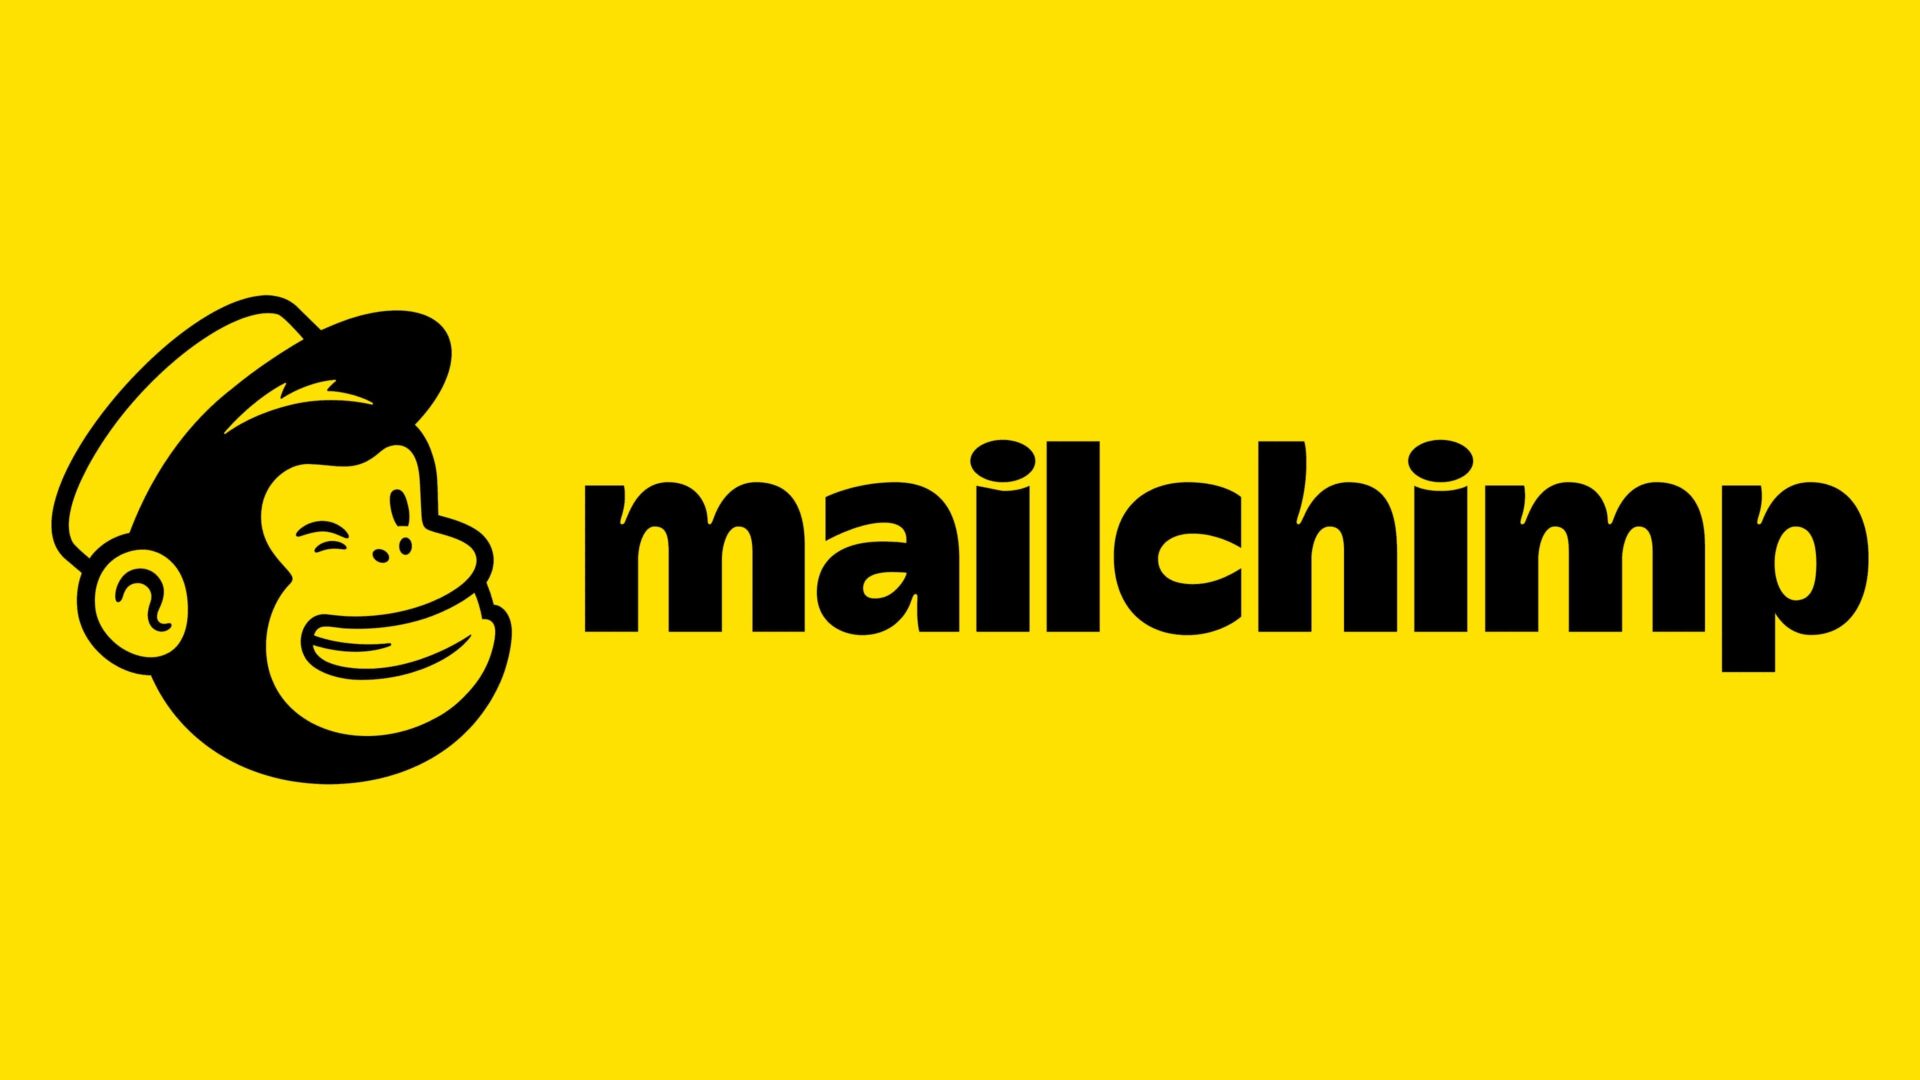 The official MailChimp logo